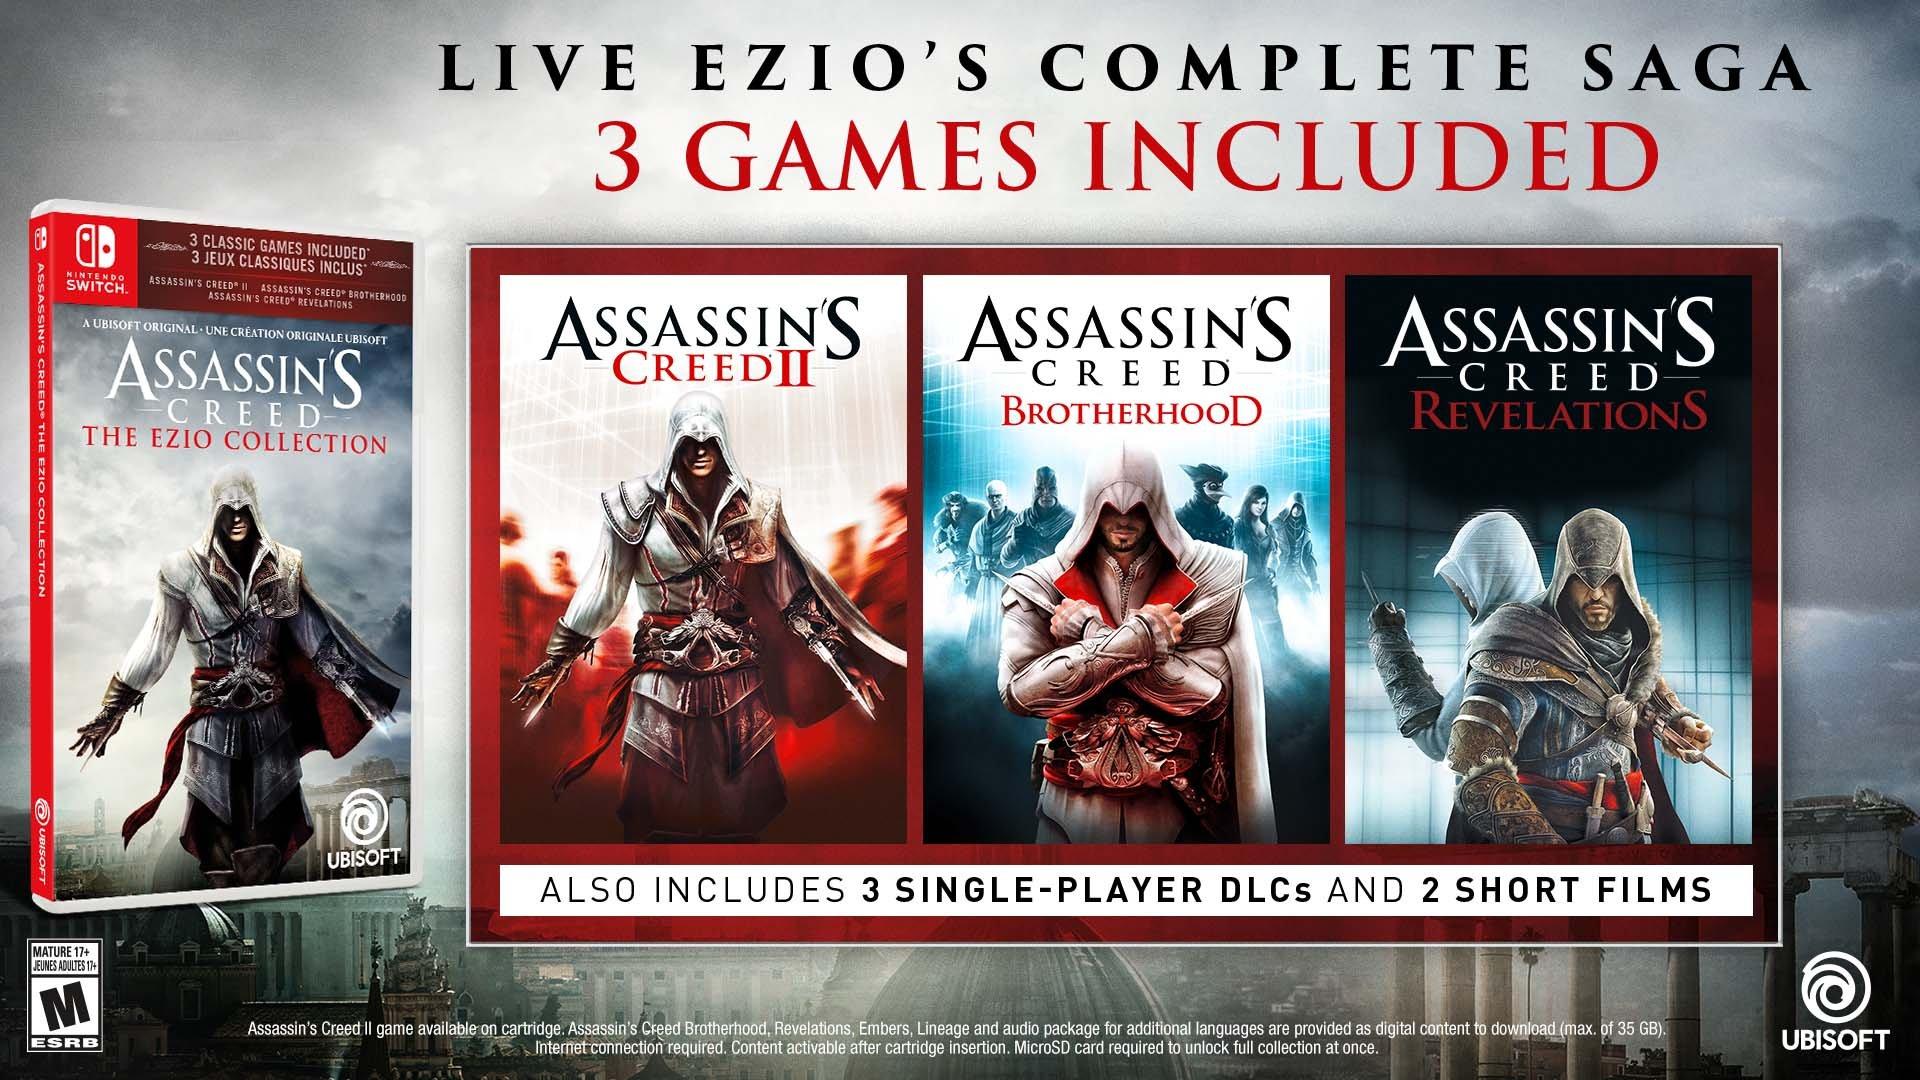 Assassin's Creed: The Ezio Collection (Nintendo Switch) – igabiba